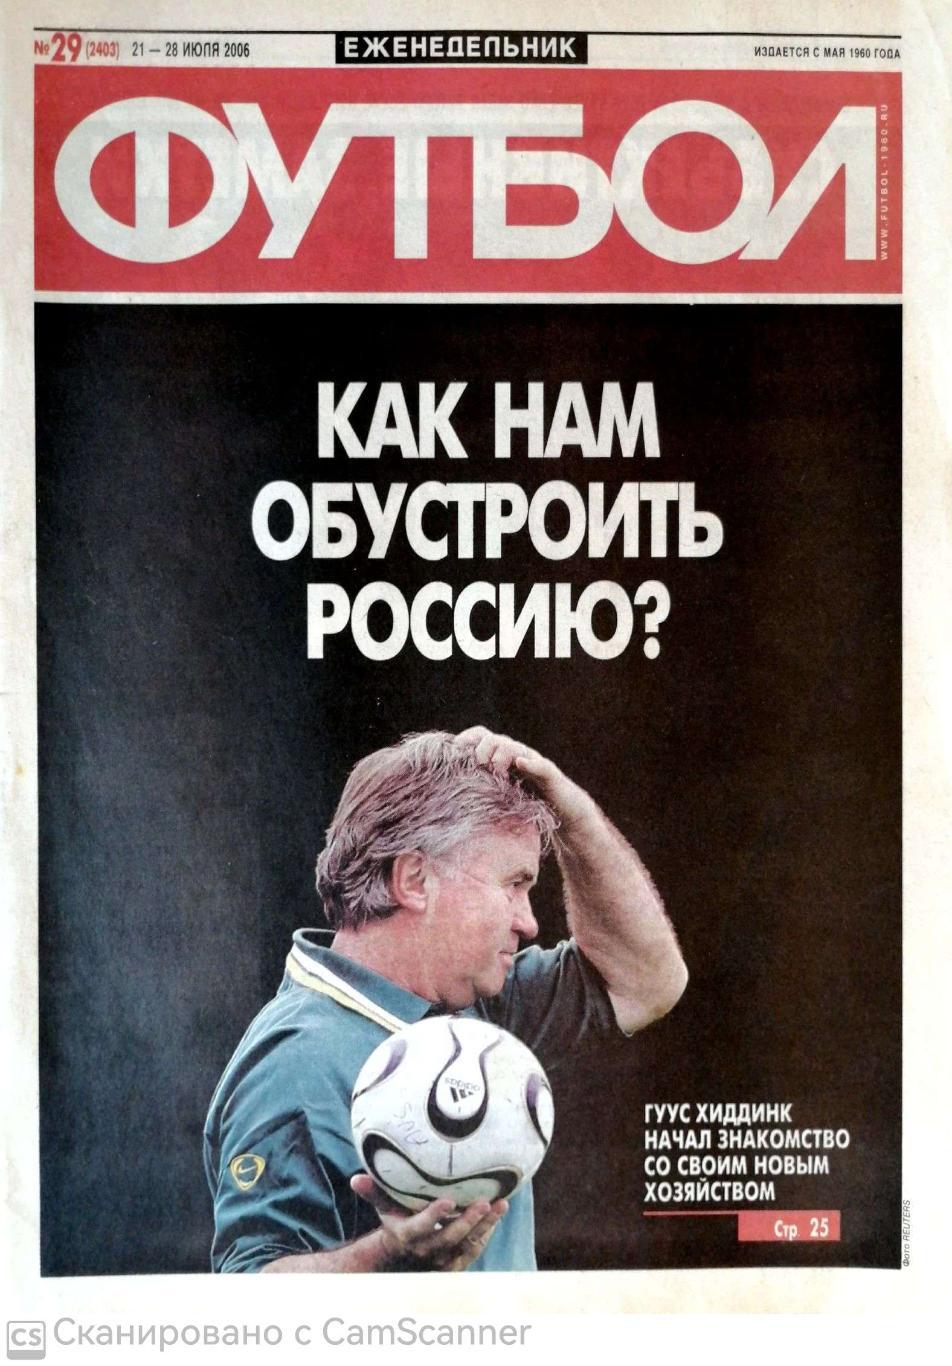 Еженедельник «Футбол» (Москва). 2006 год. №29